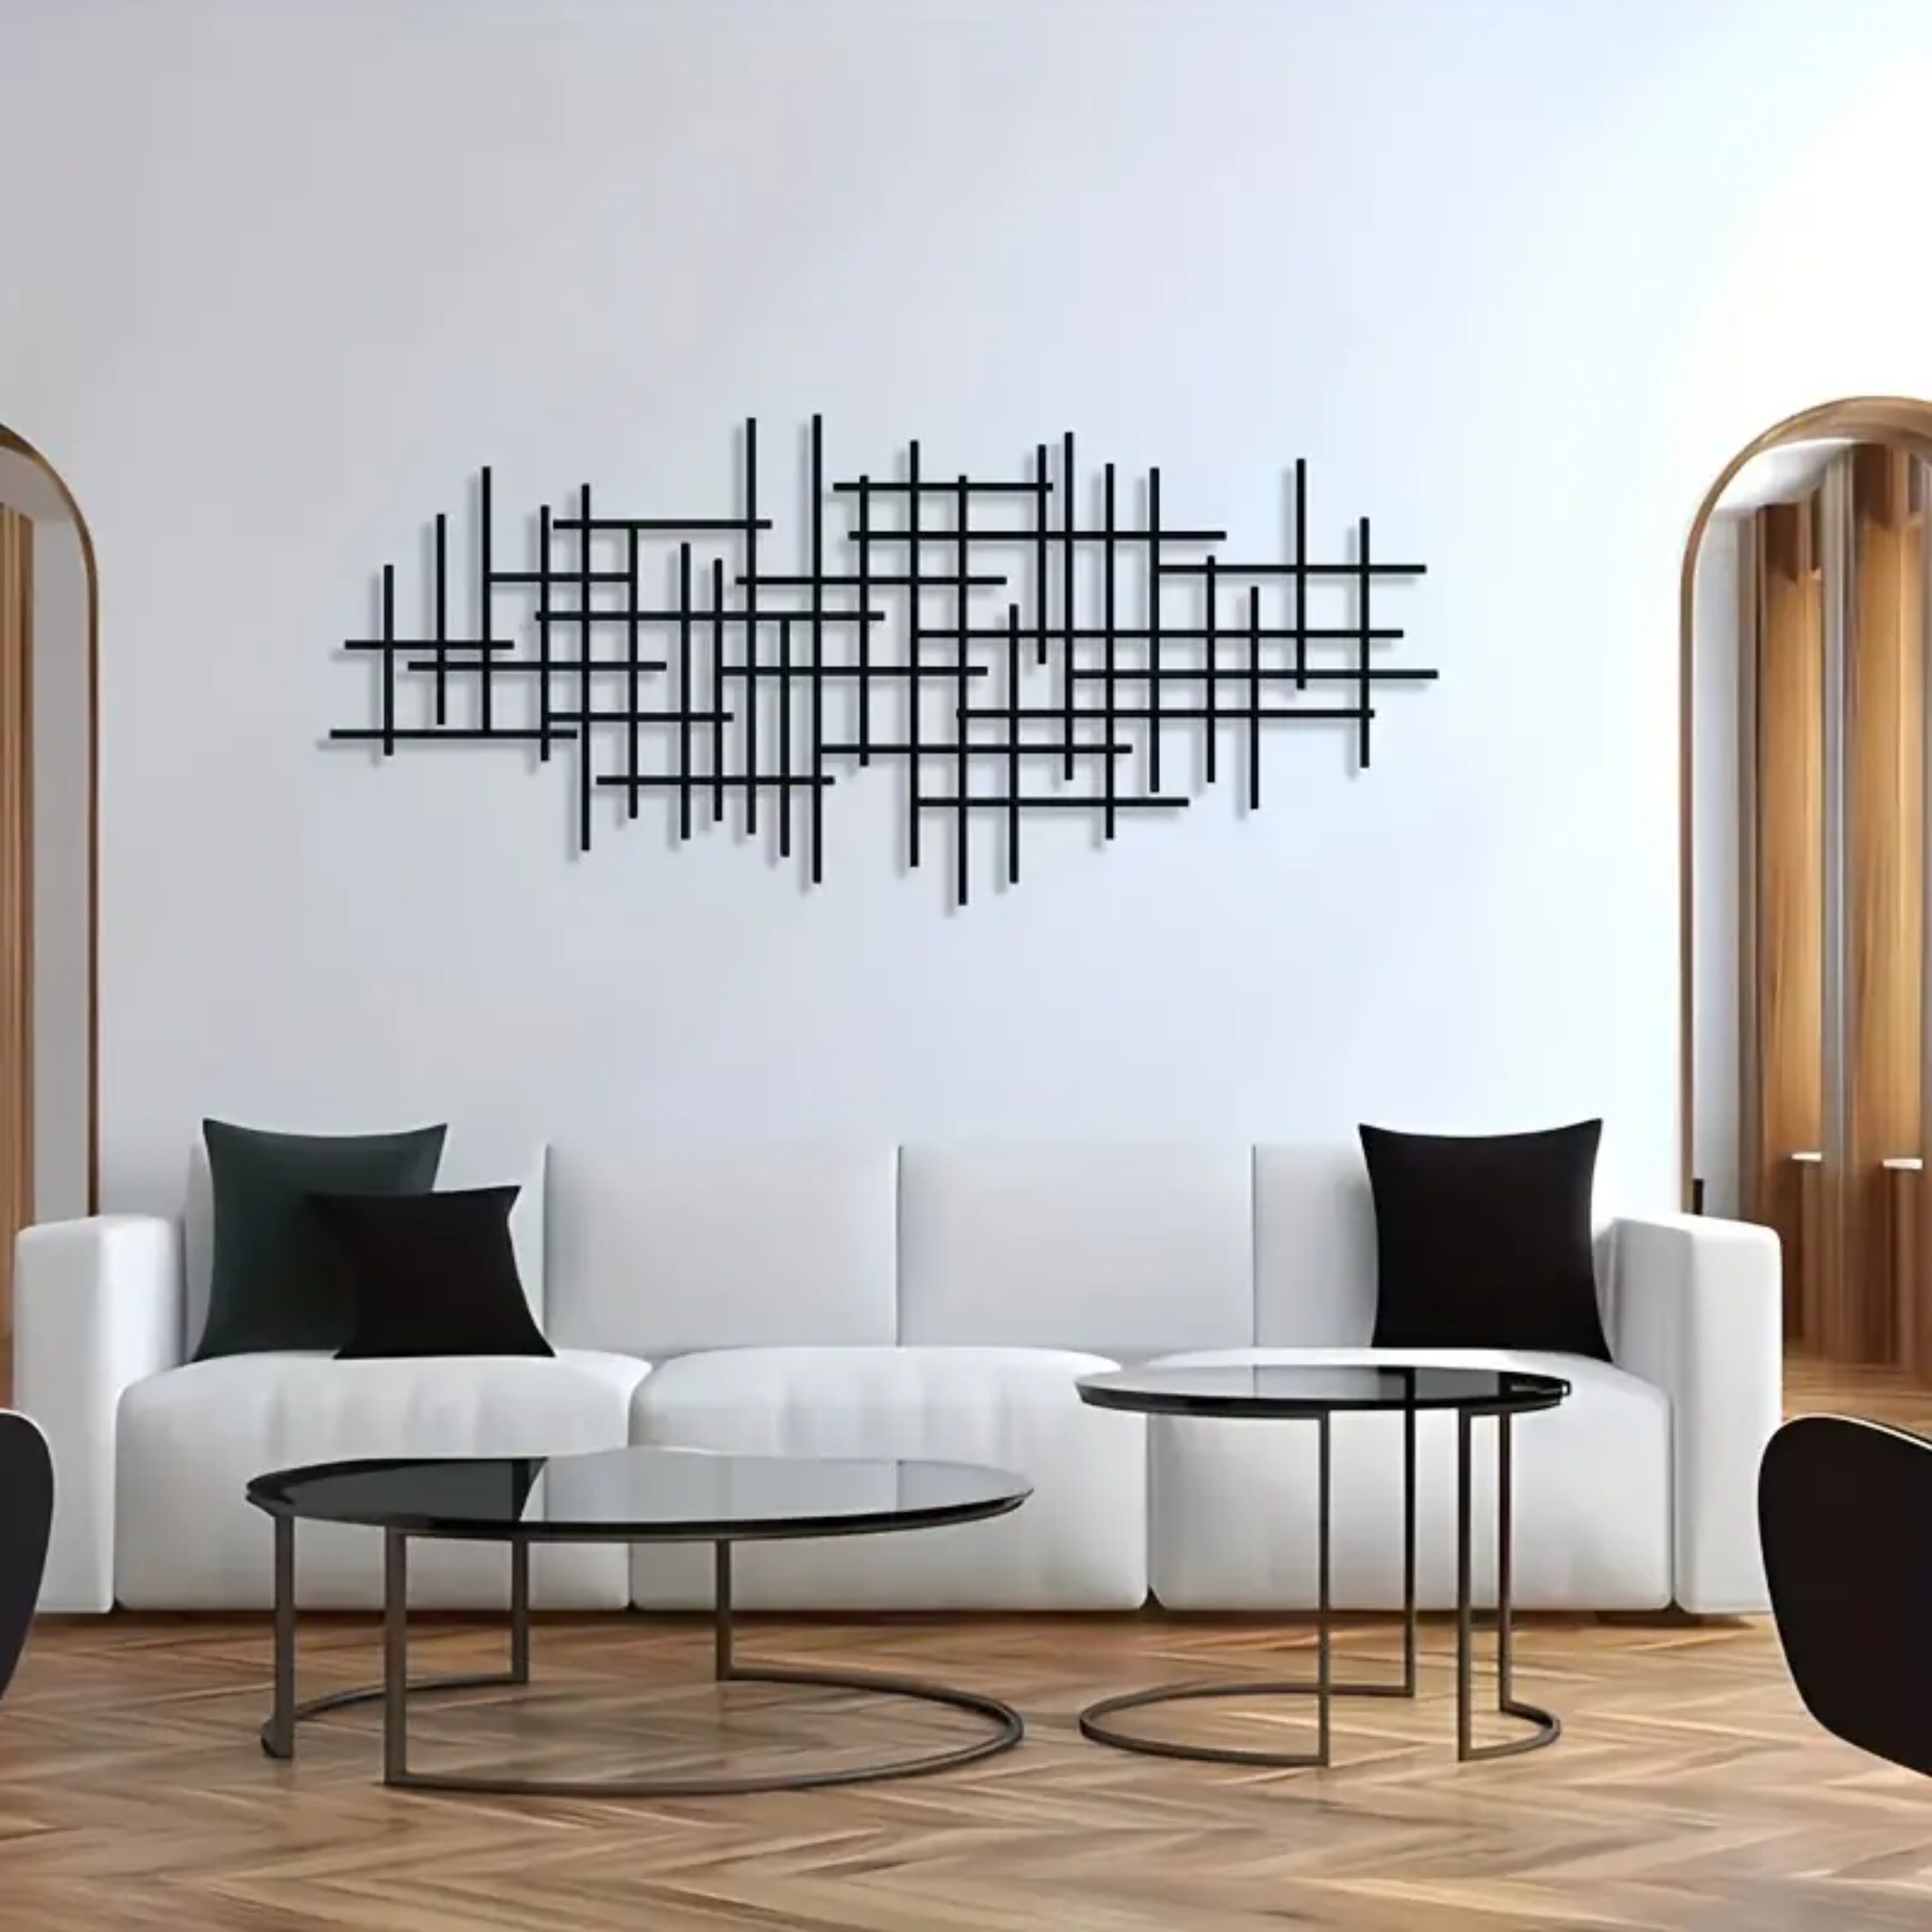 

Boho-chic Geometric Metal Wall Art - Abstract Sculpture For Living Room & Bedroom Decor, Perfect Easter Gift Boho Home Decor Wall Art Decor